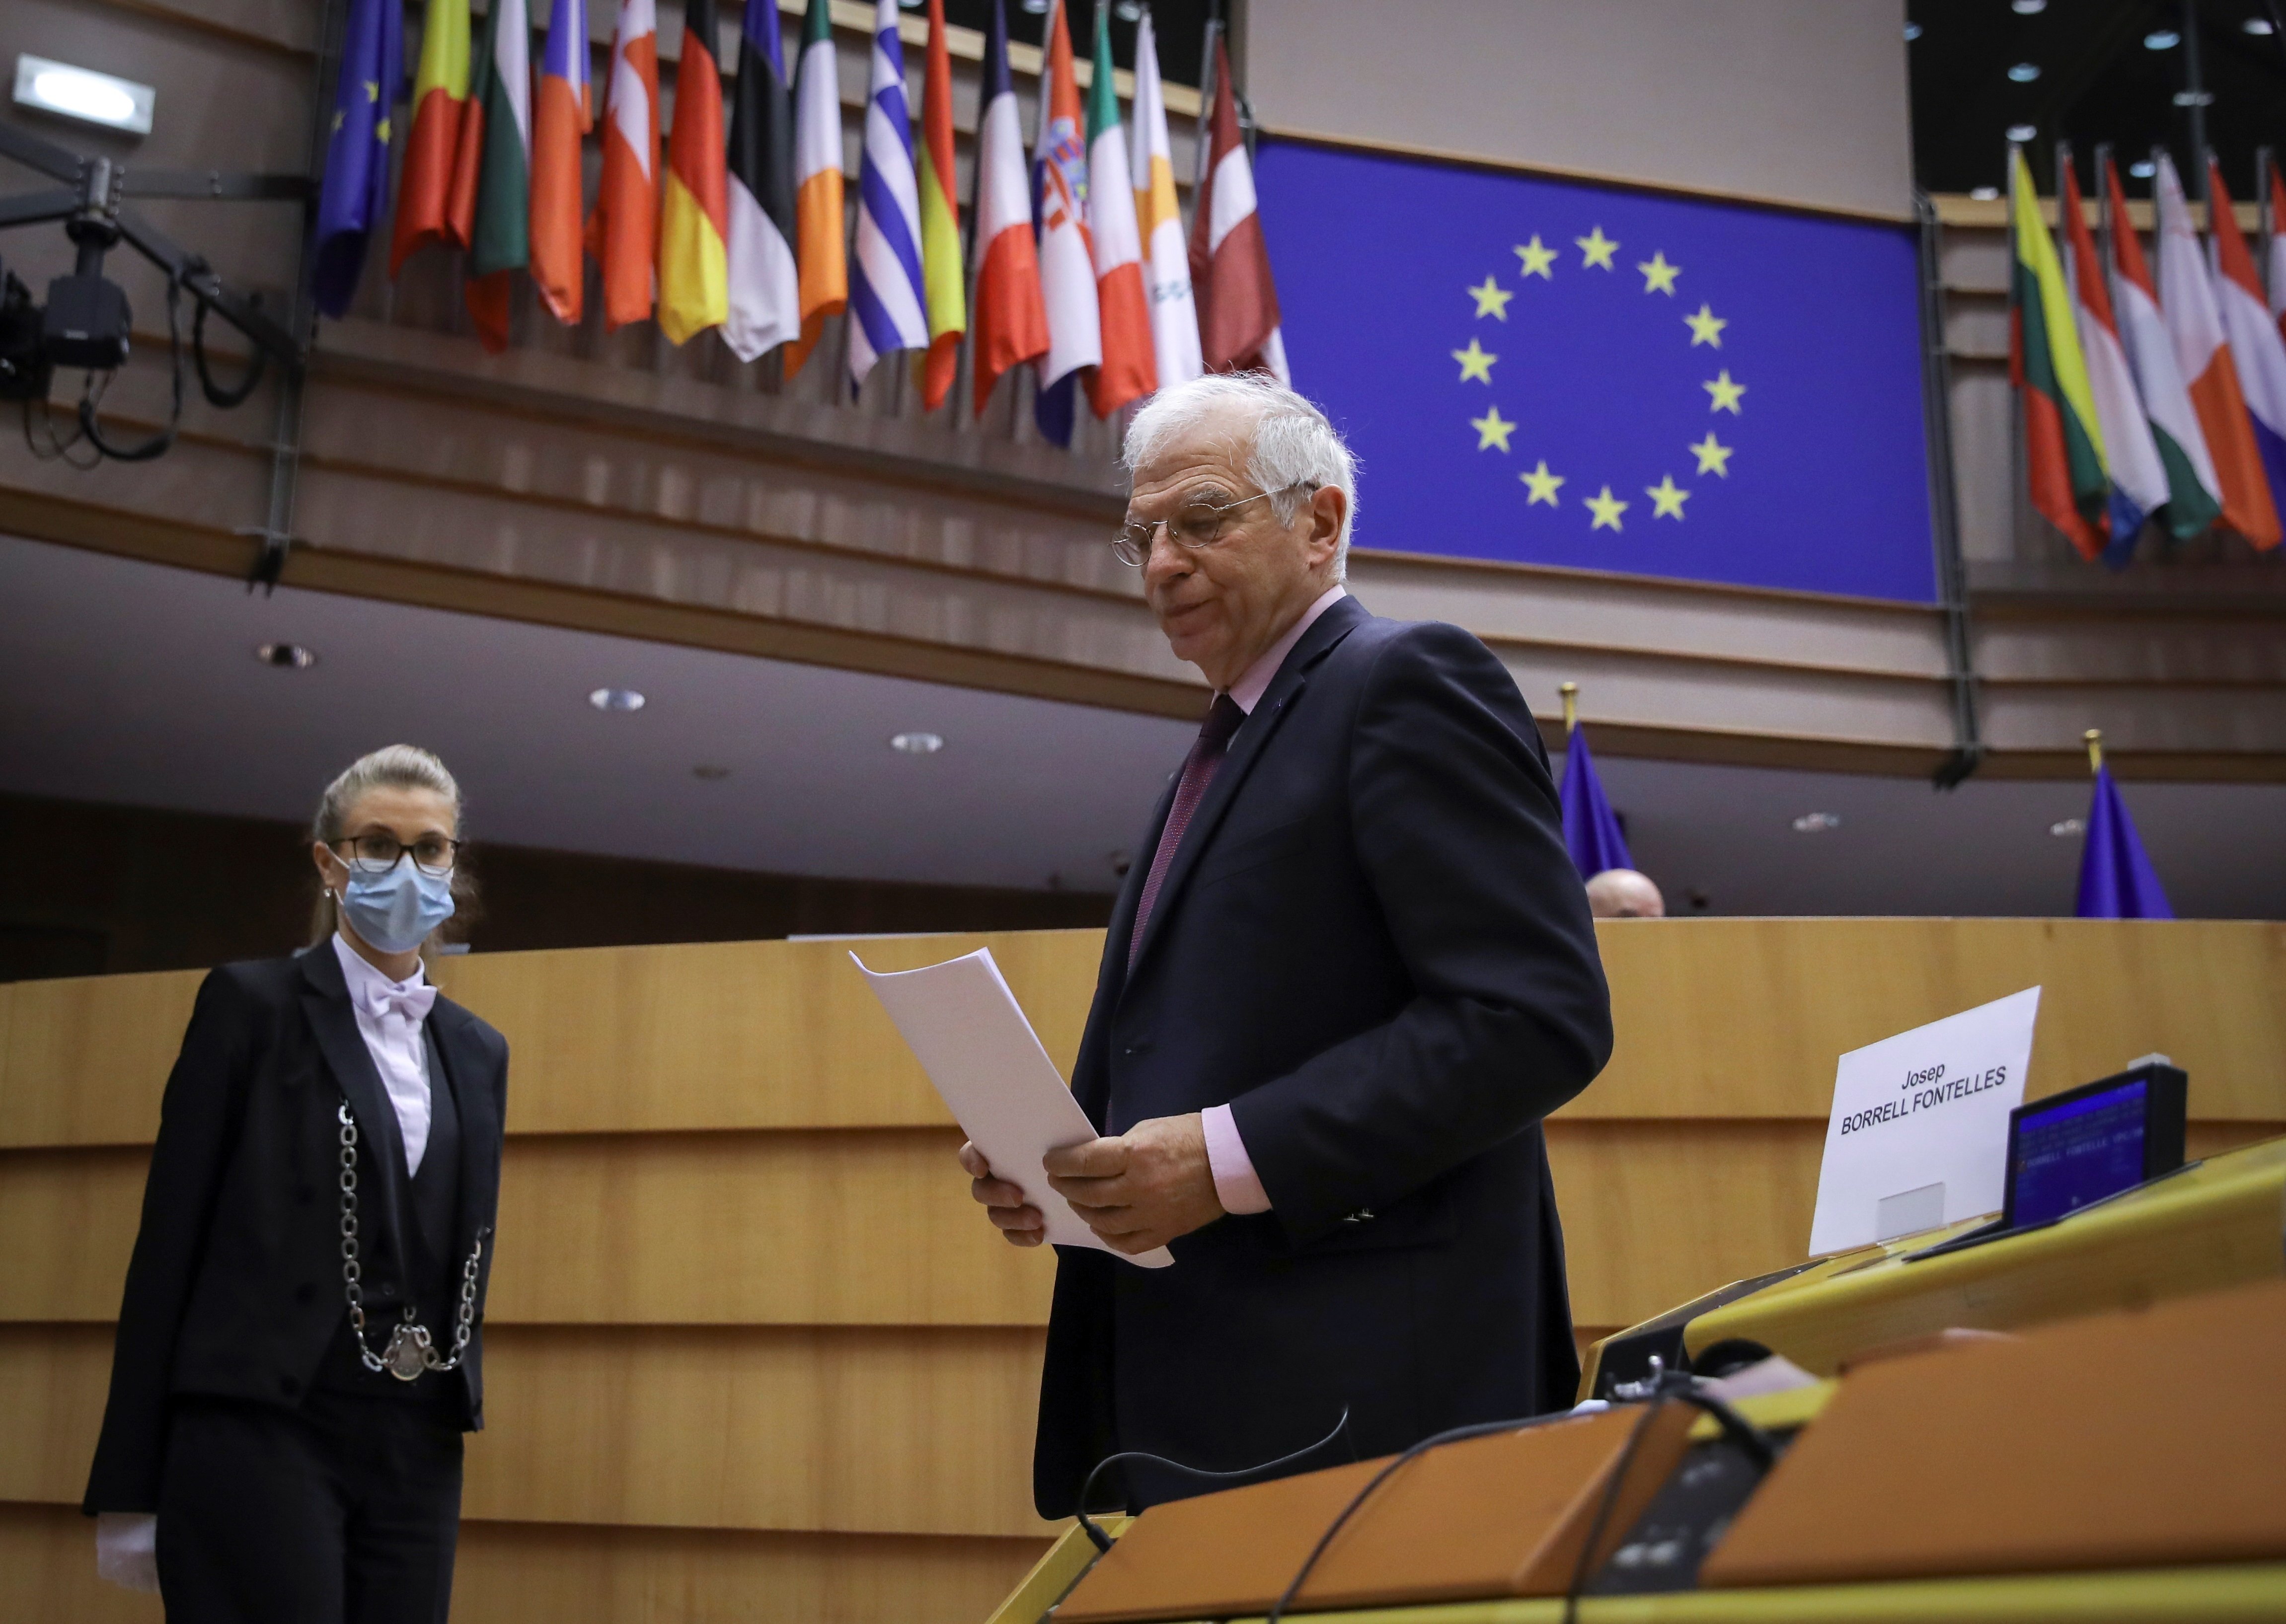 Así ha desbaratado Borrell la diplomacia europea, según un diario suizo